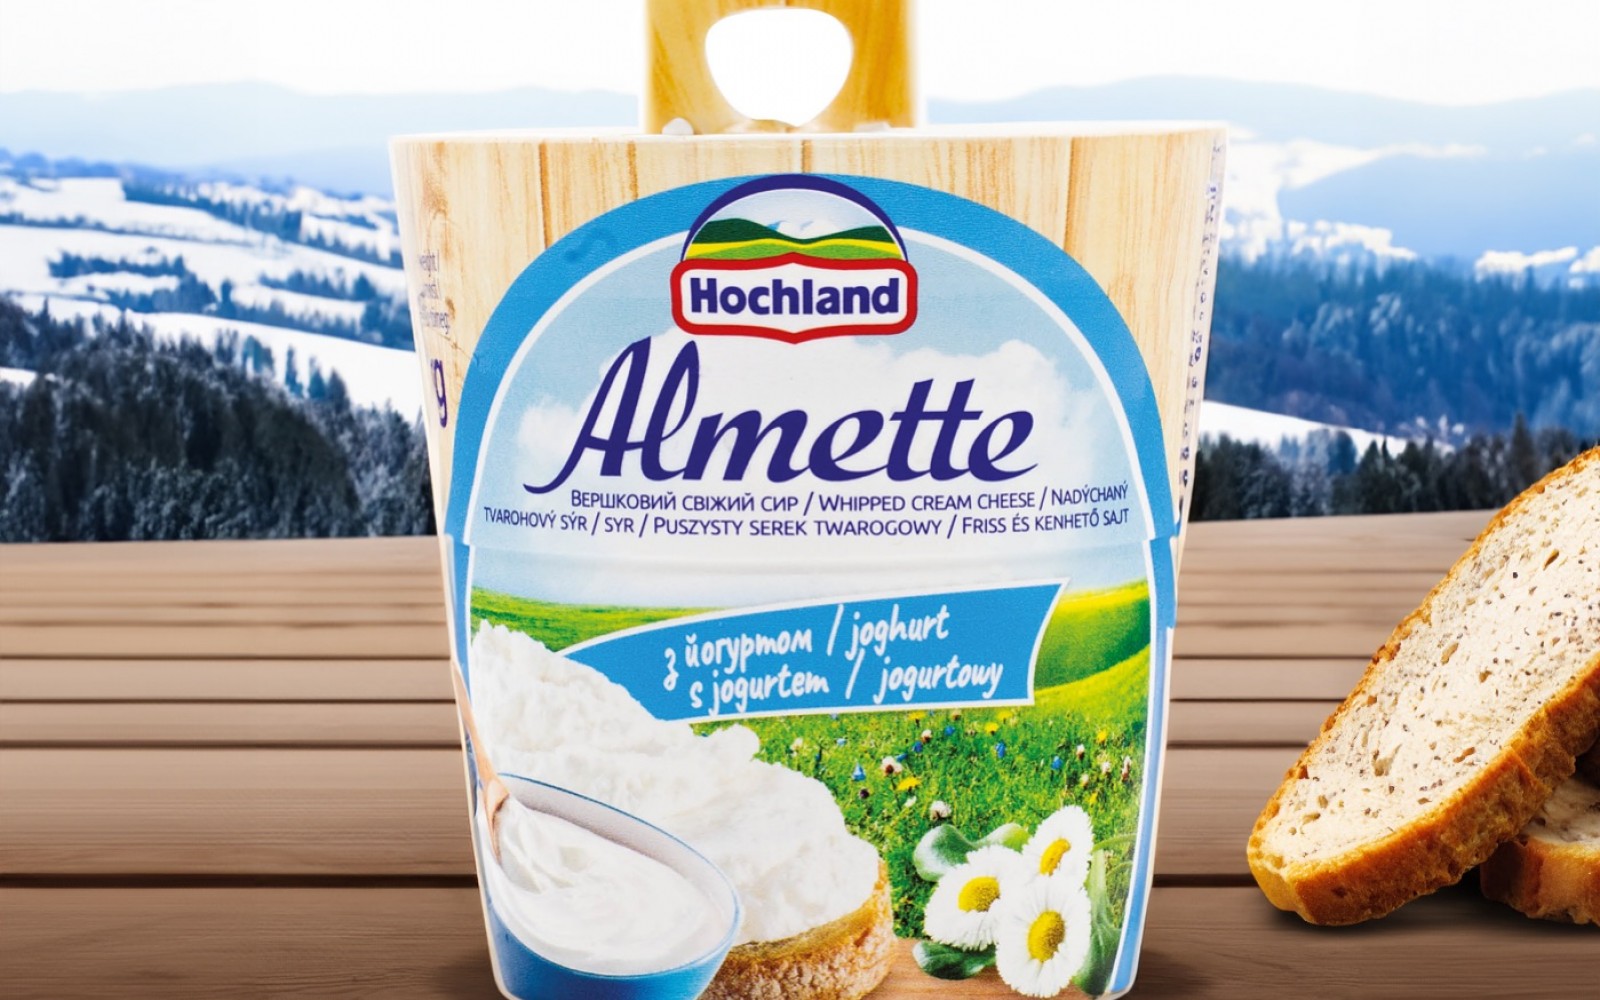 Discover the diverse world of Almette cheese creams!